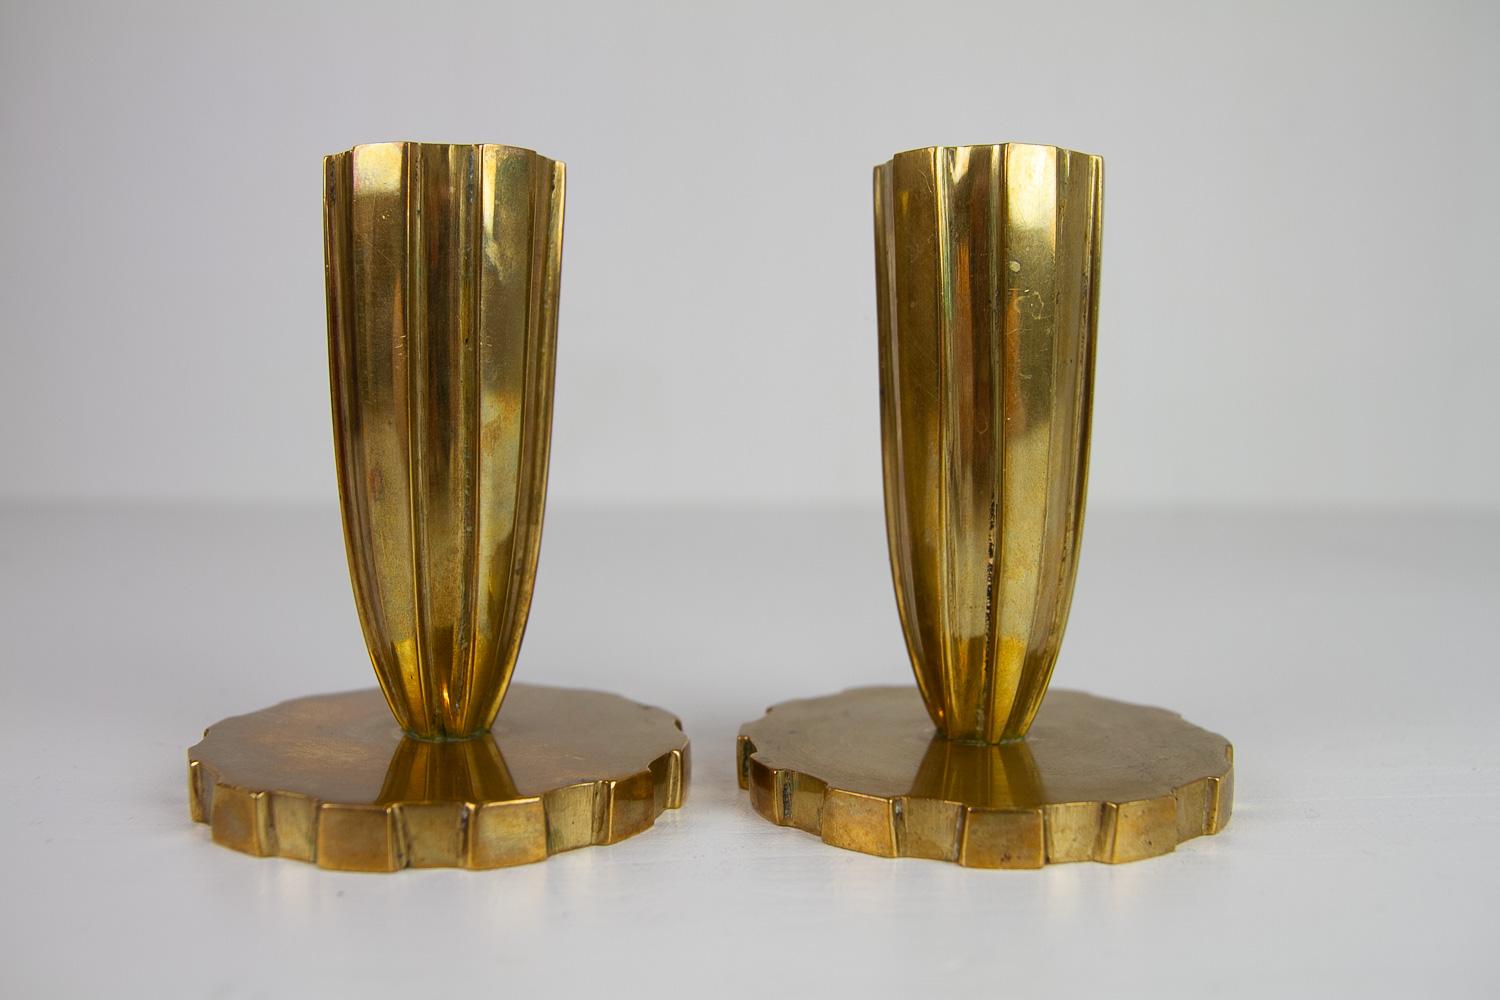 Mid-20th Century Danish Art Deco Brass Candleholders by Vendor Copenhagen, 1930s. Set of 2.